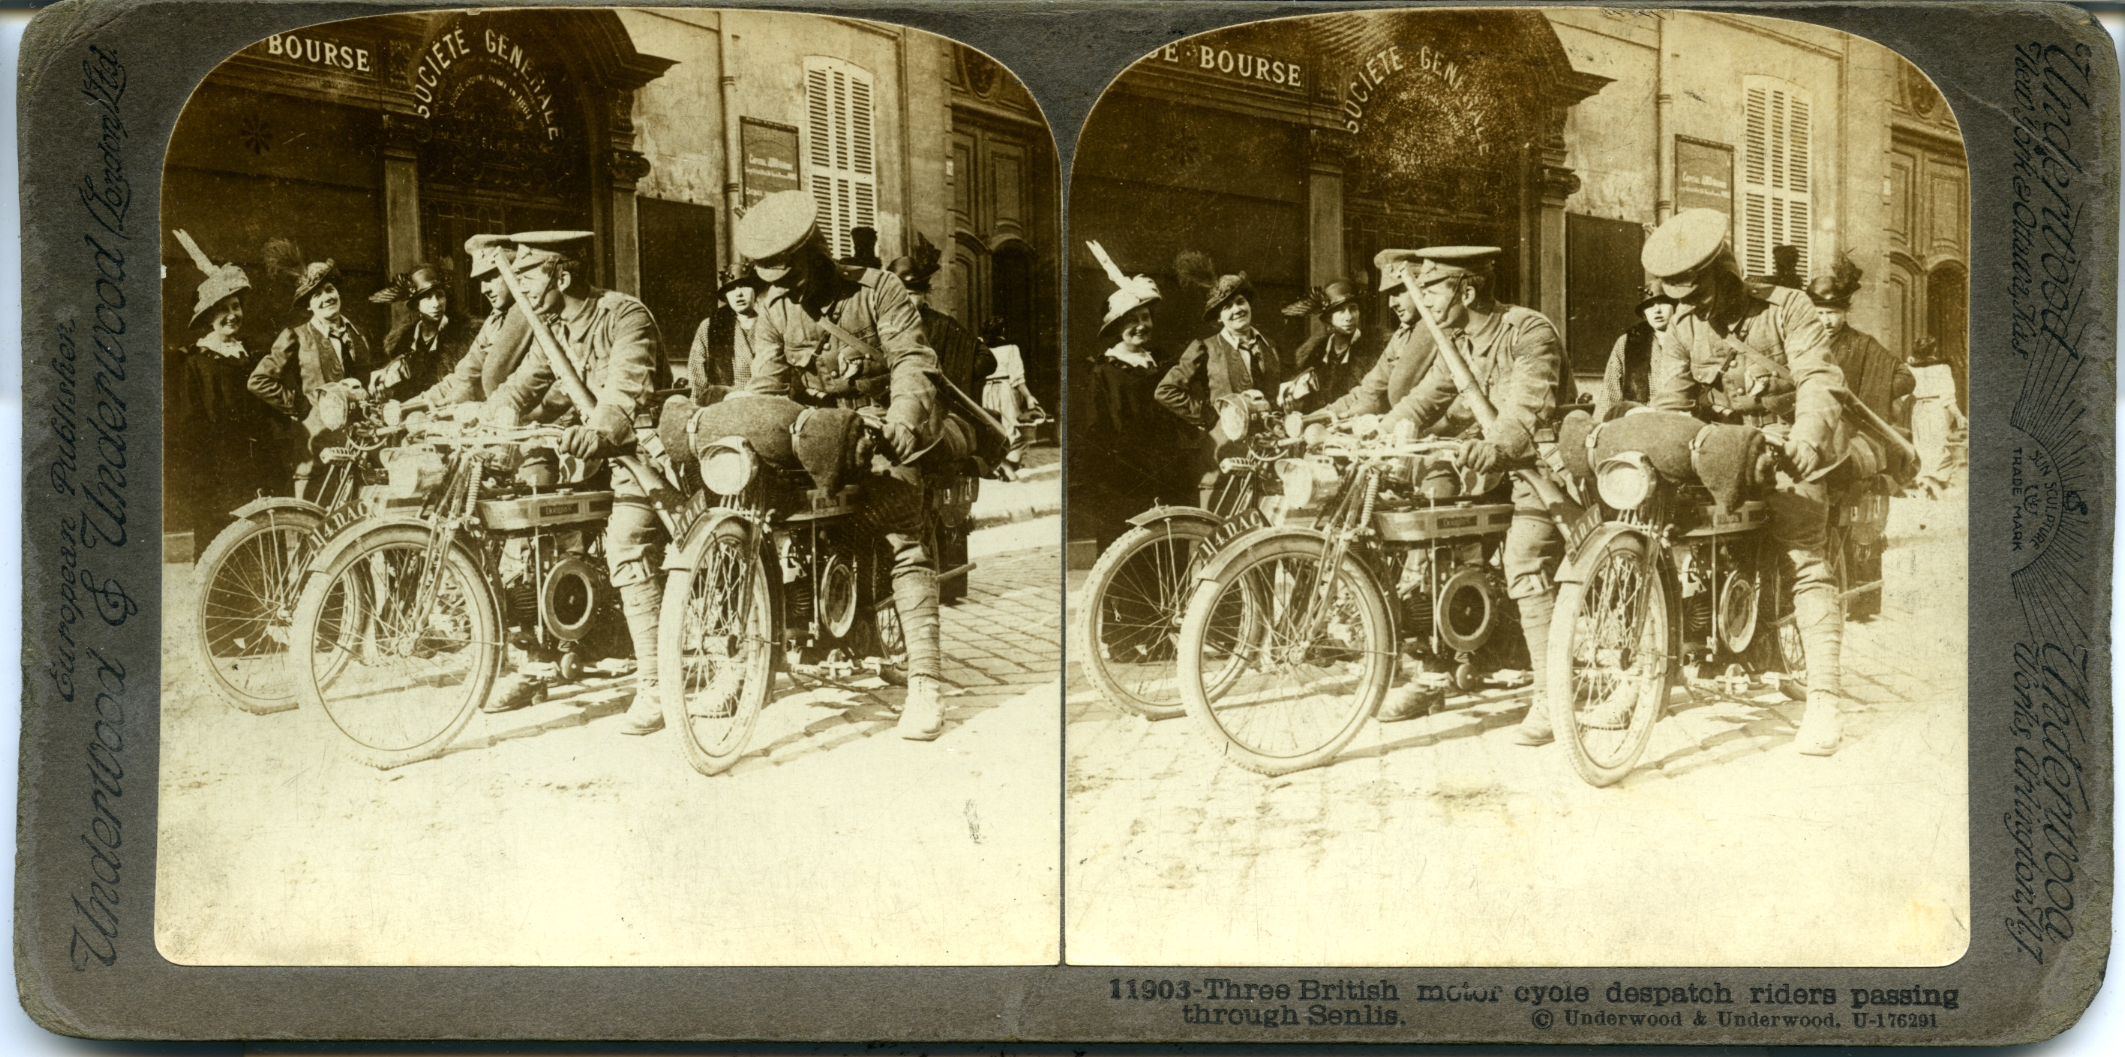 Three British motor cycle despatch riders passing through Senlis